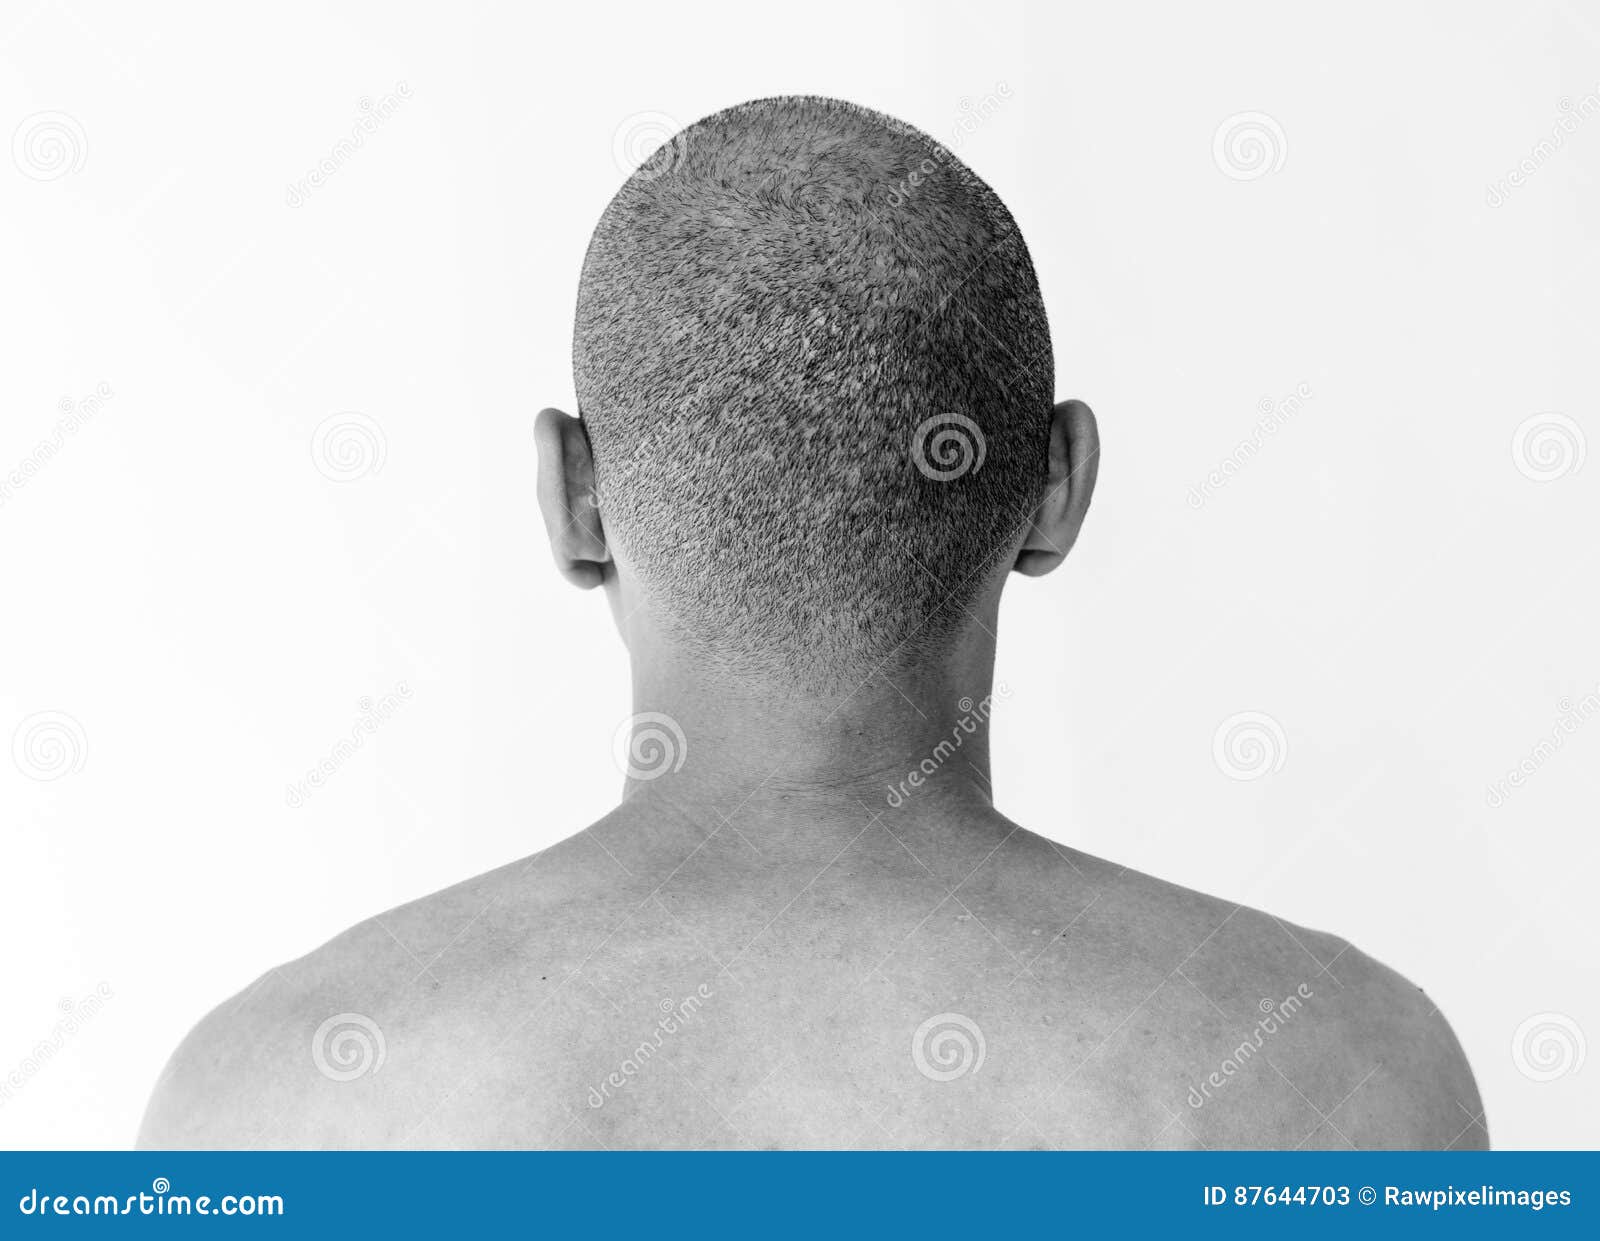 man shirtless rear view studio portrait